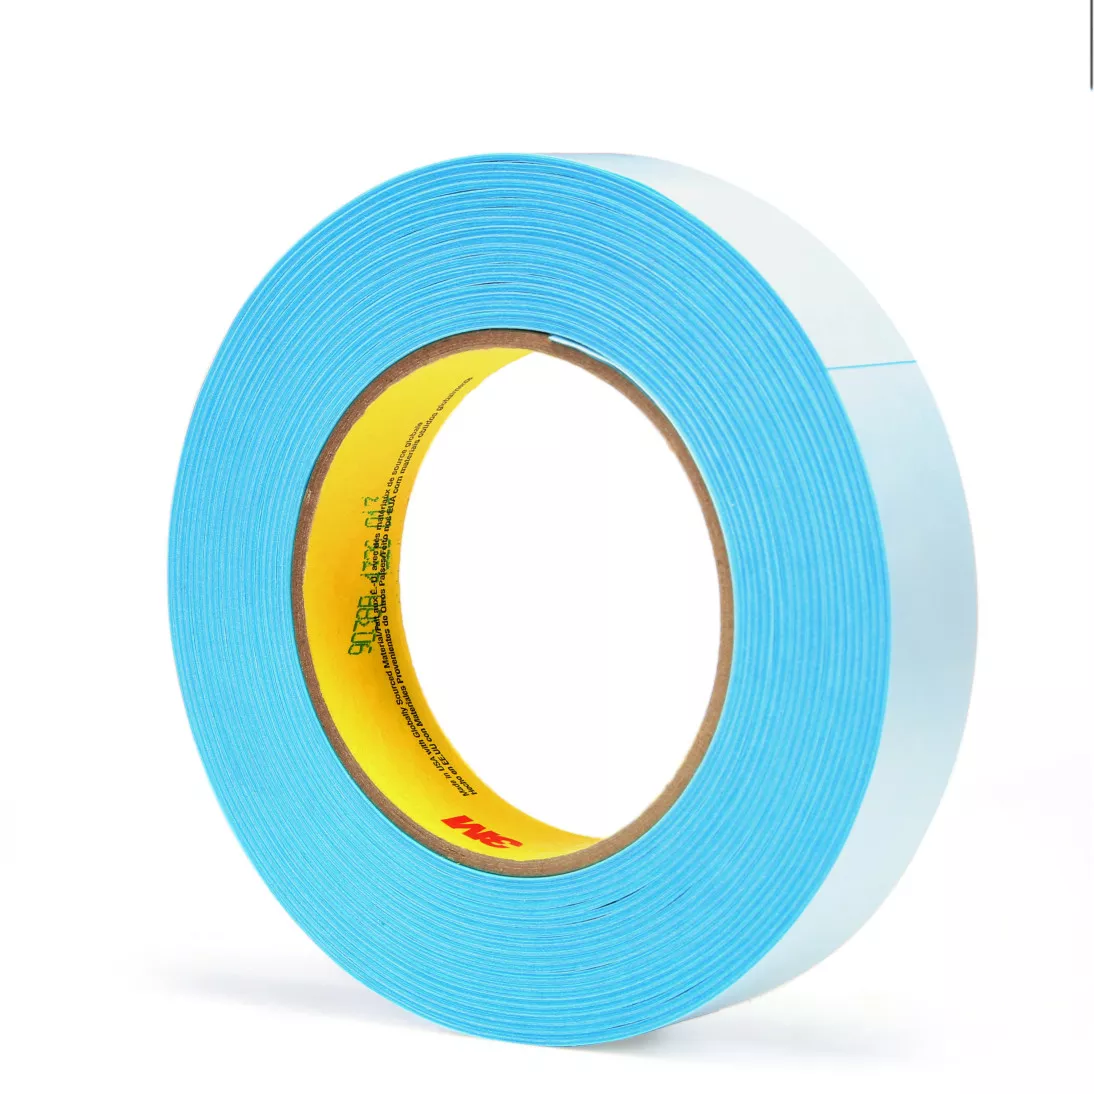 3M™ Repulpable Double Coated Splicing Tape 9038B, Blue, 24 mm x 55 m, 3
mil, 36 rolls per case